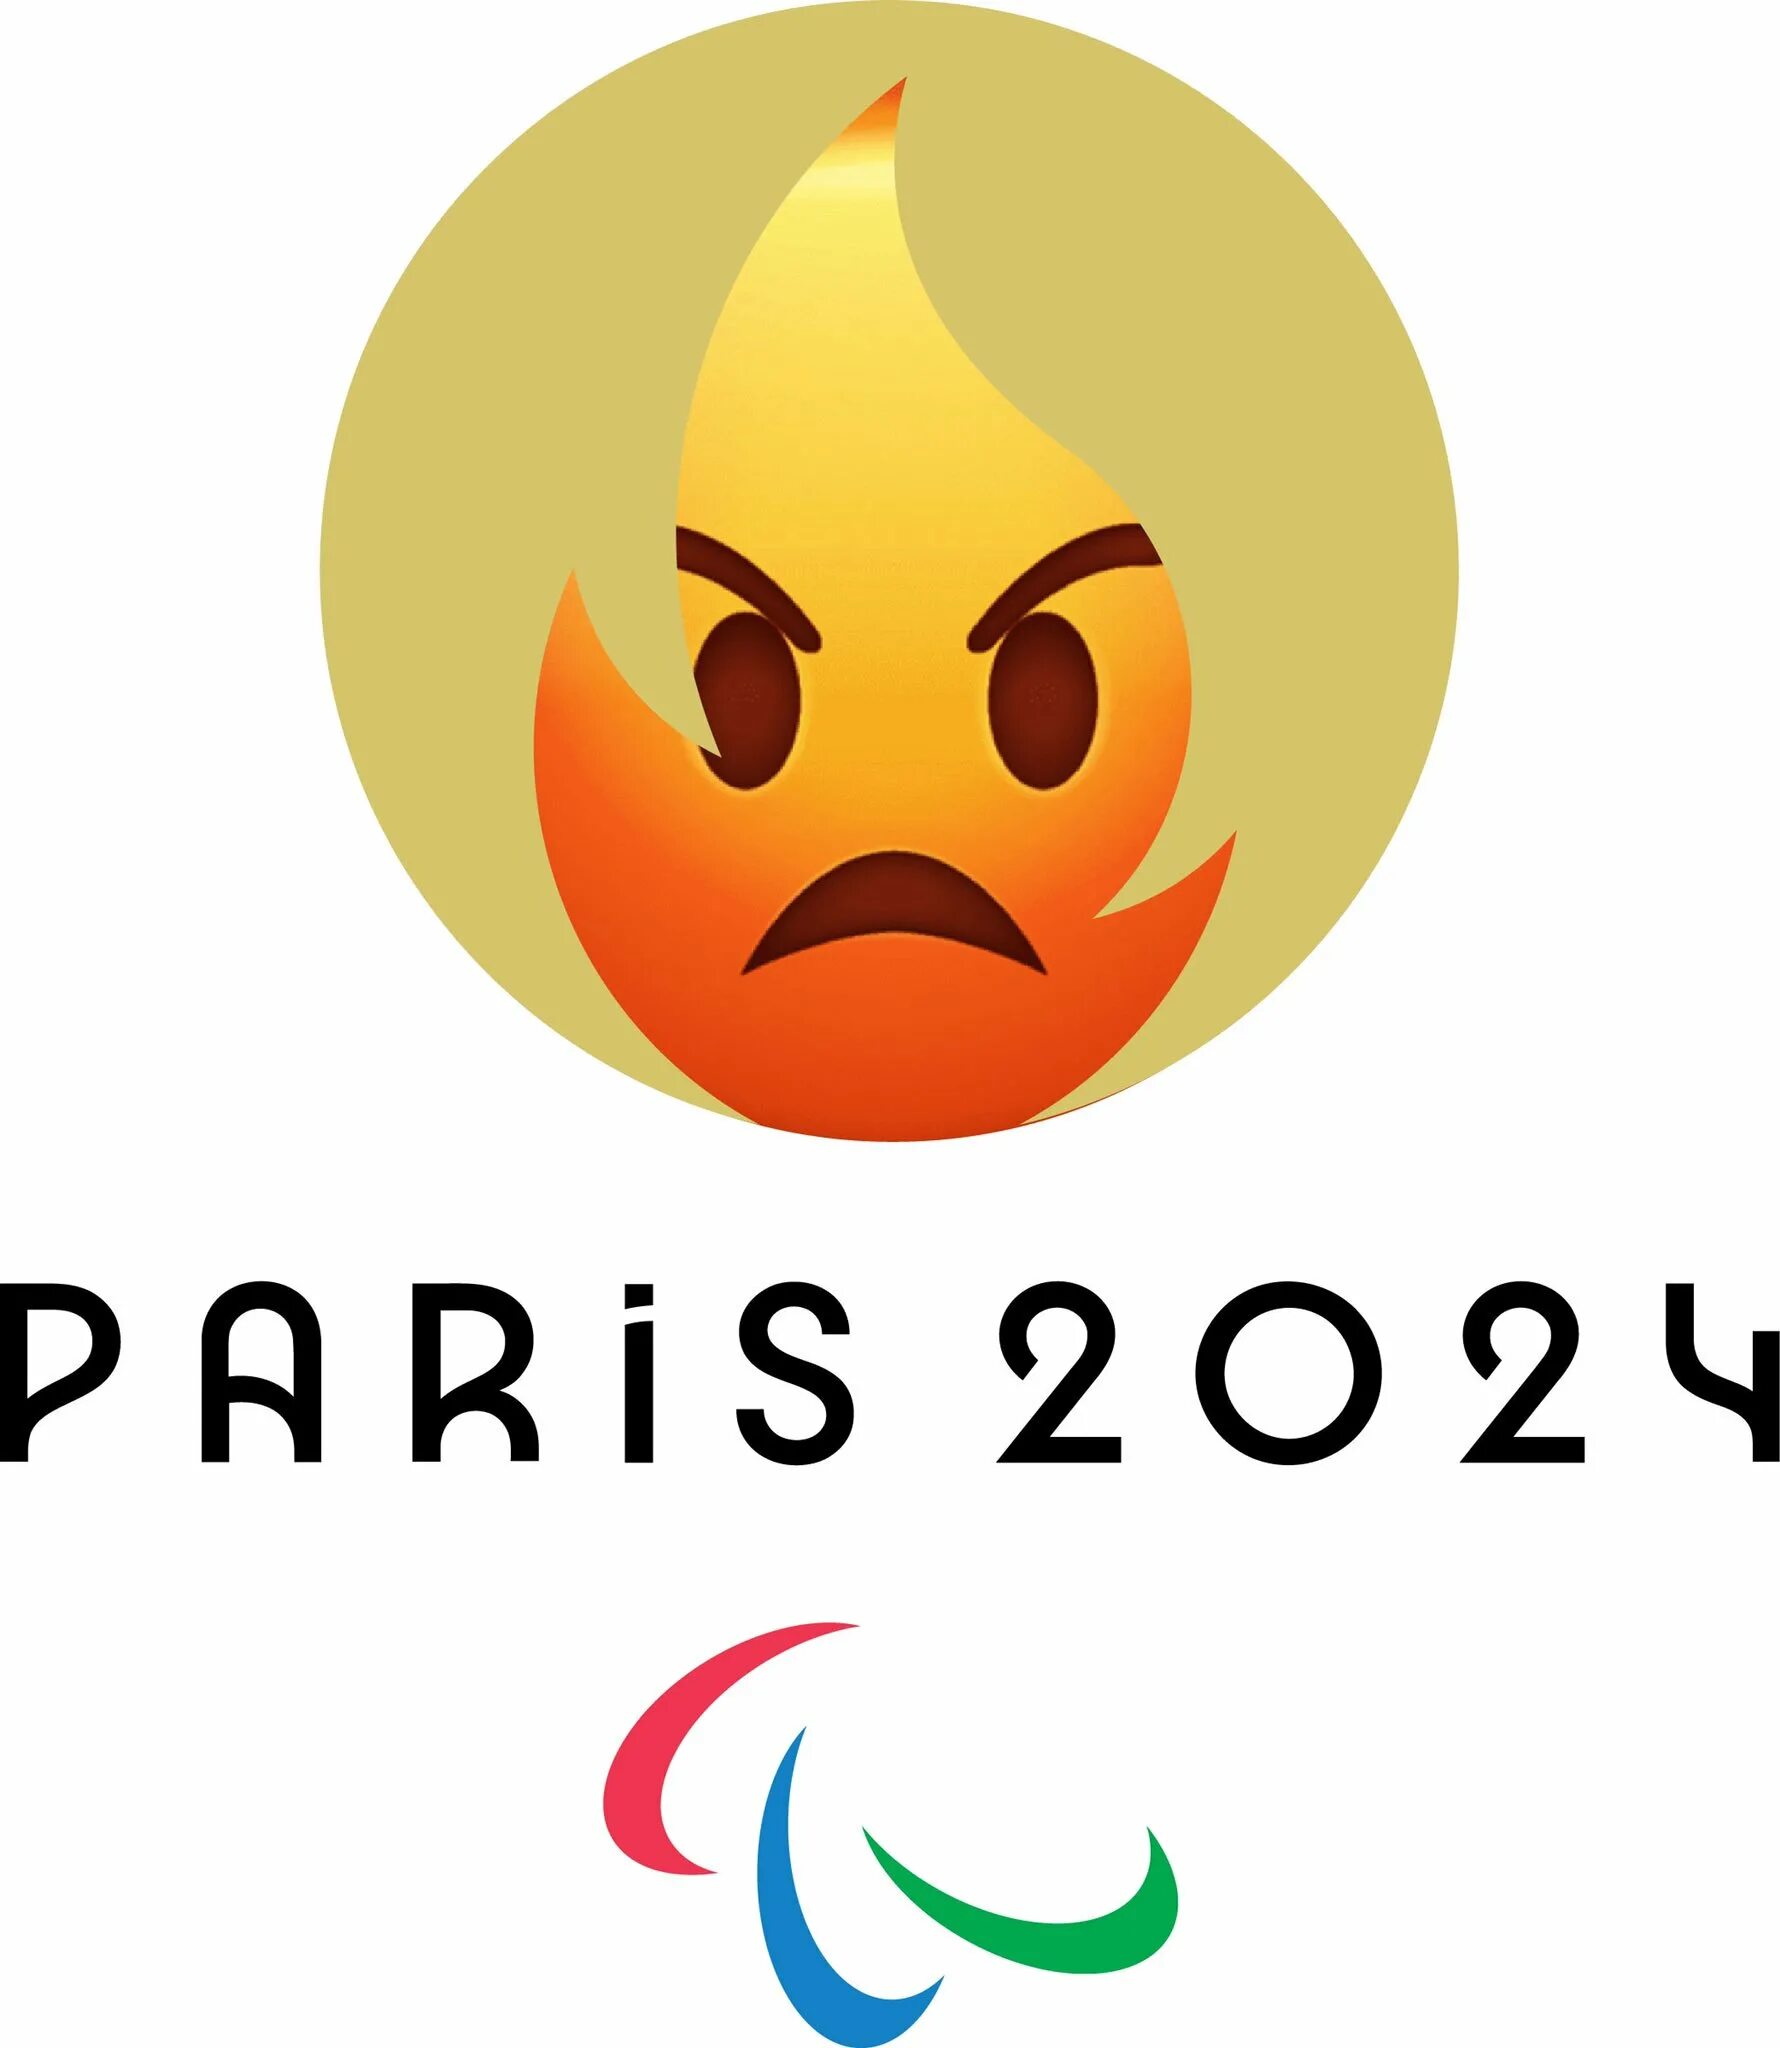 Лого 2024 года. Париж 2024 логотип. Логотип олимпиады 2024. Логотип Олимпийских игр в Париже 2024. Олимпийские игры Париж логотип.